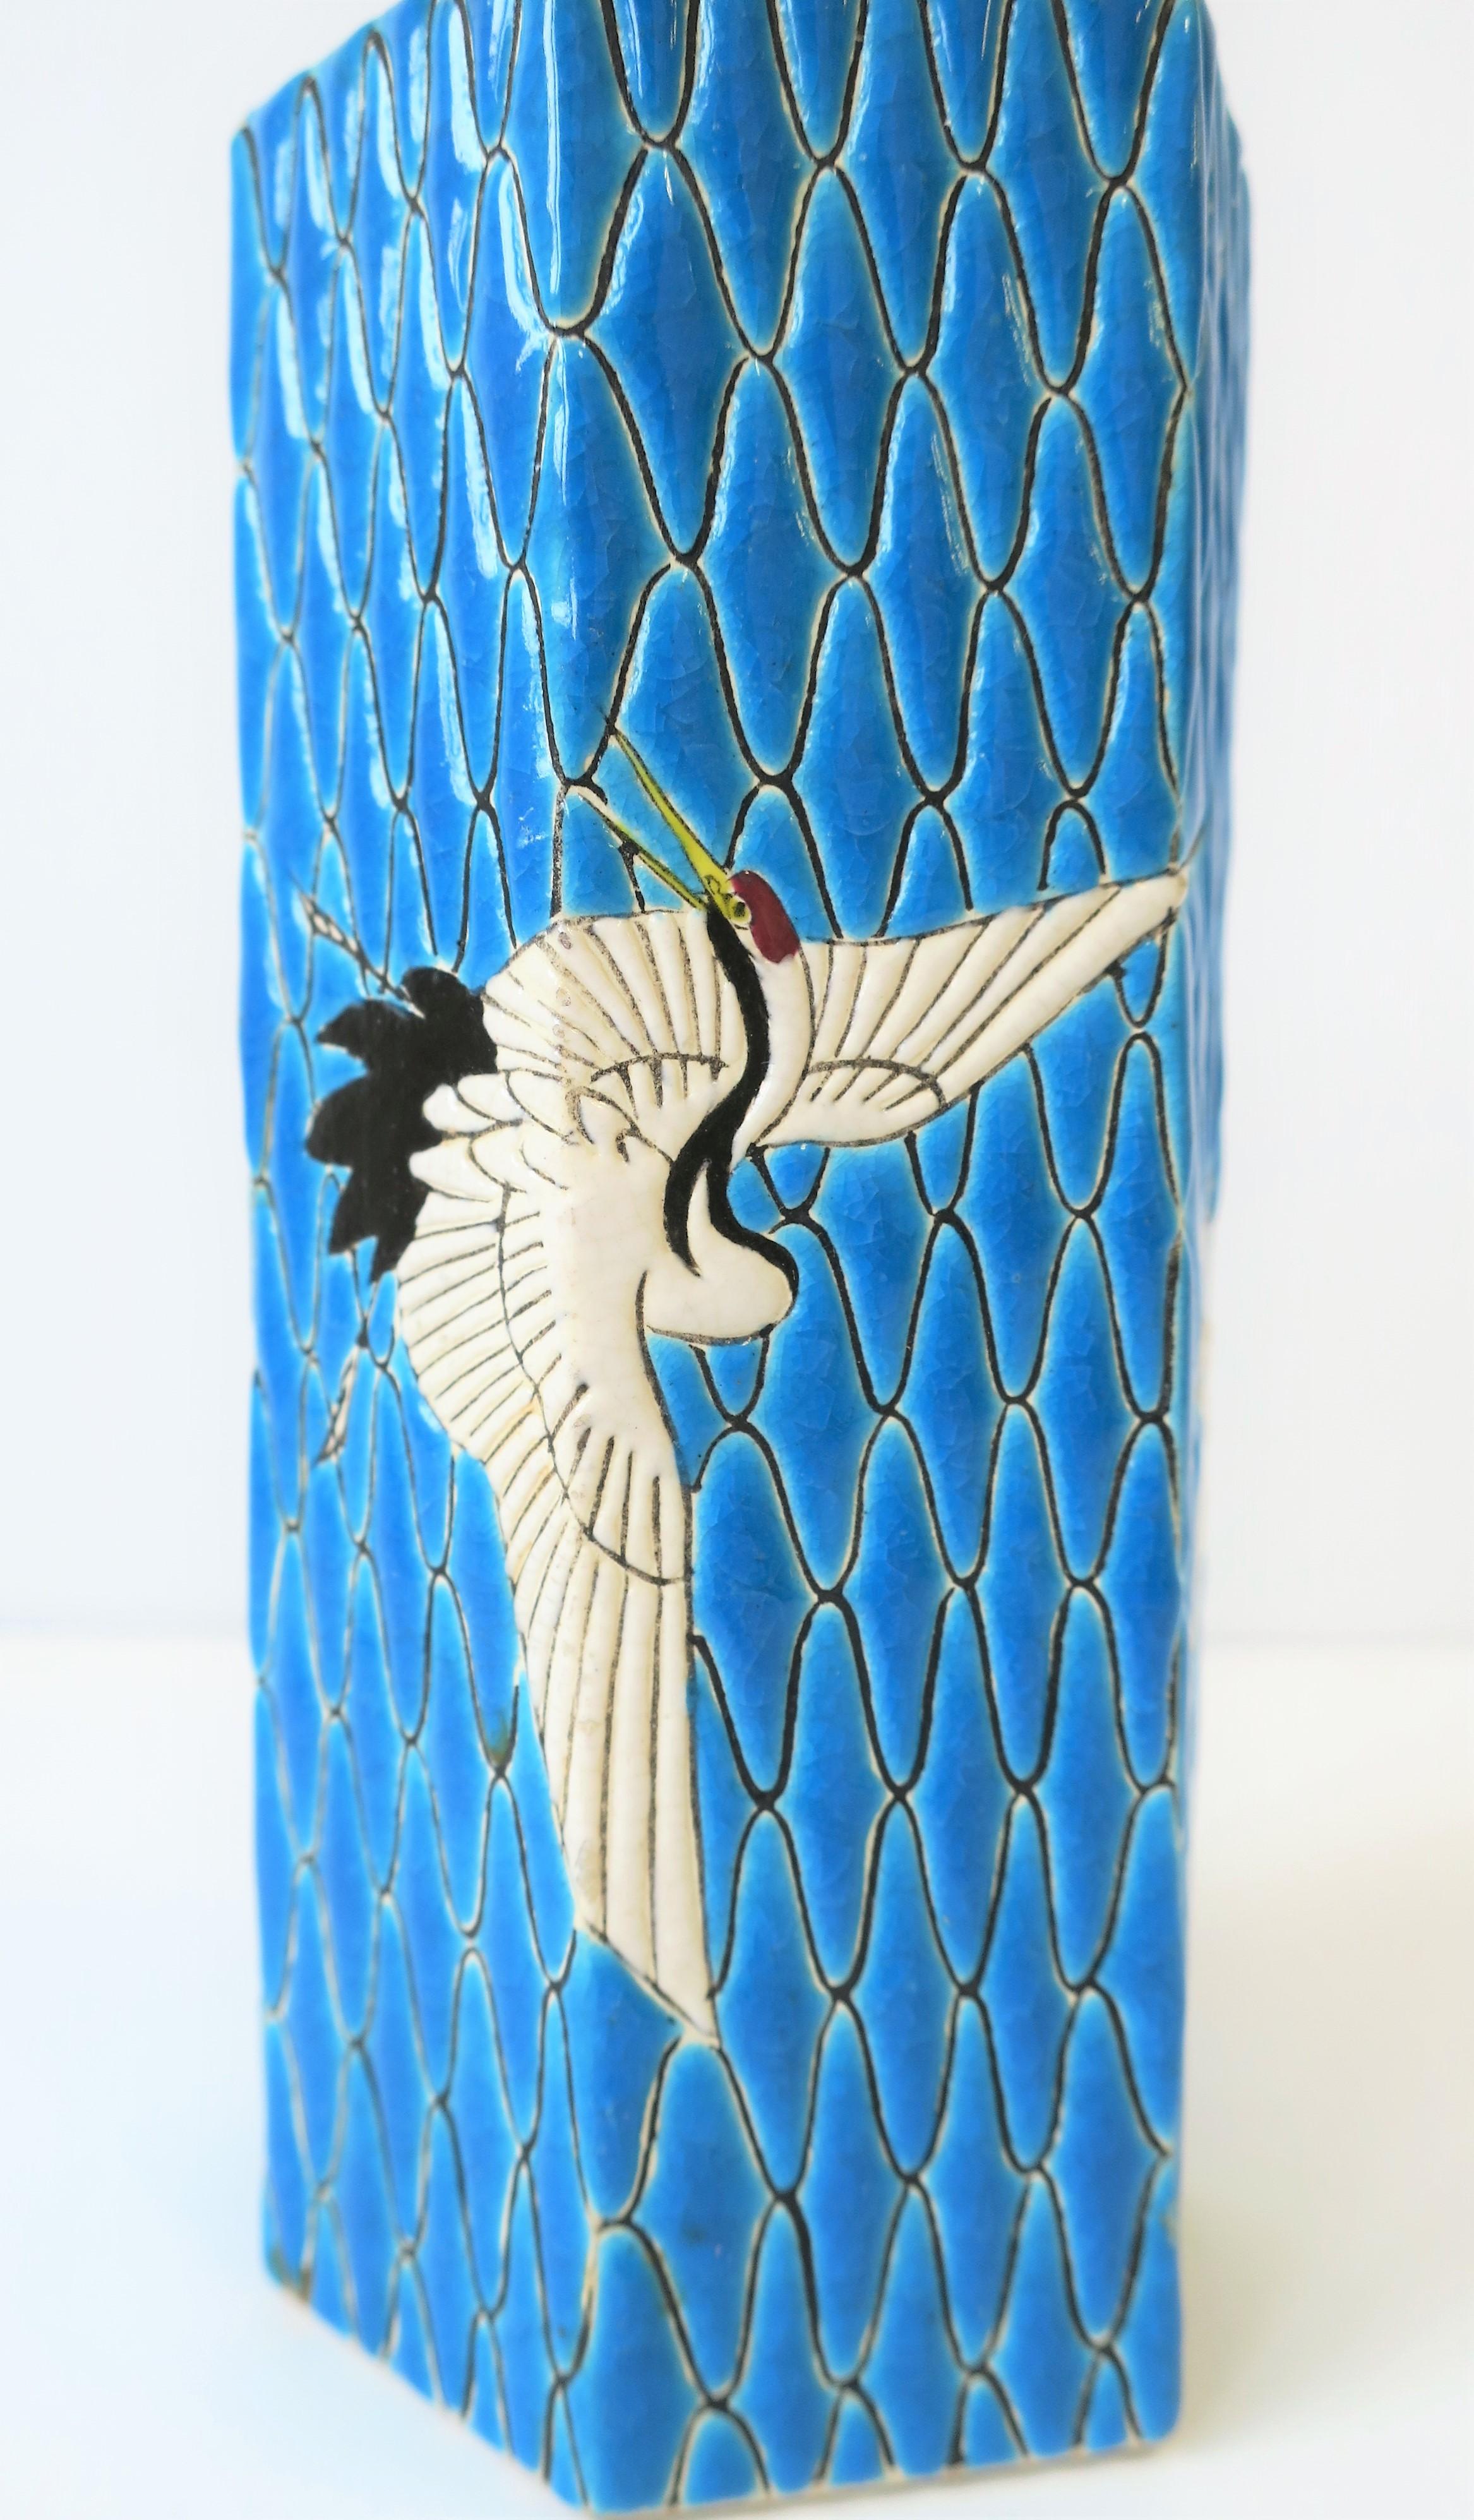 Pottery Blue and White Meiji Japanese Satsuma Majolica Style Earthenware Vase with Birds